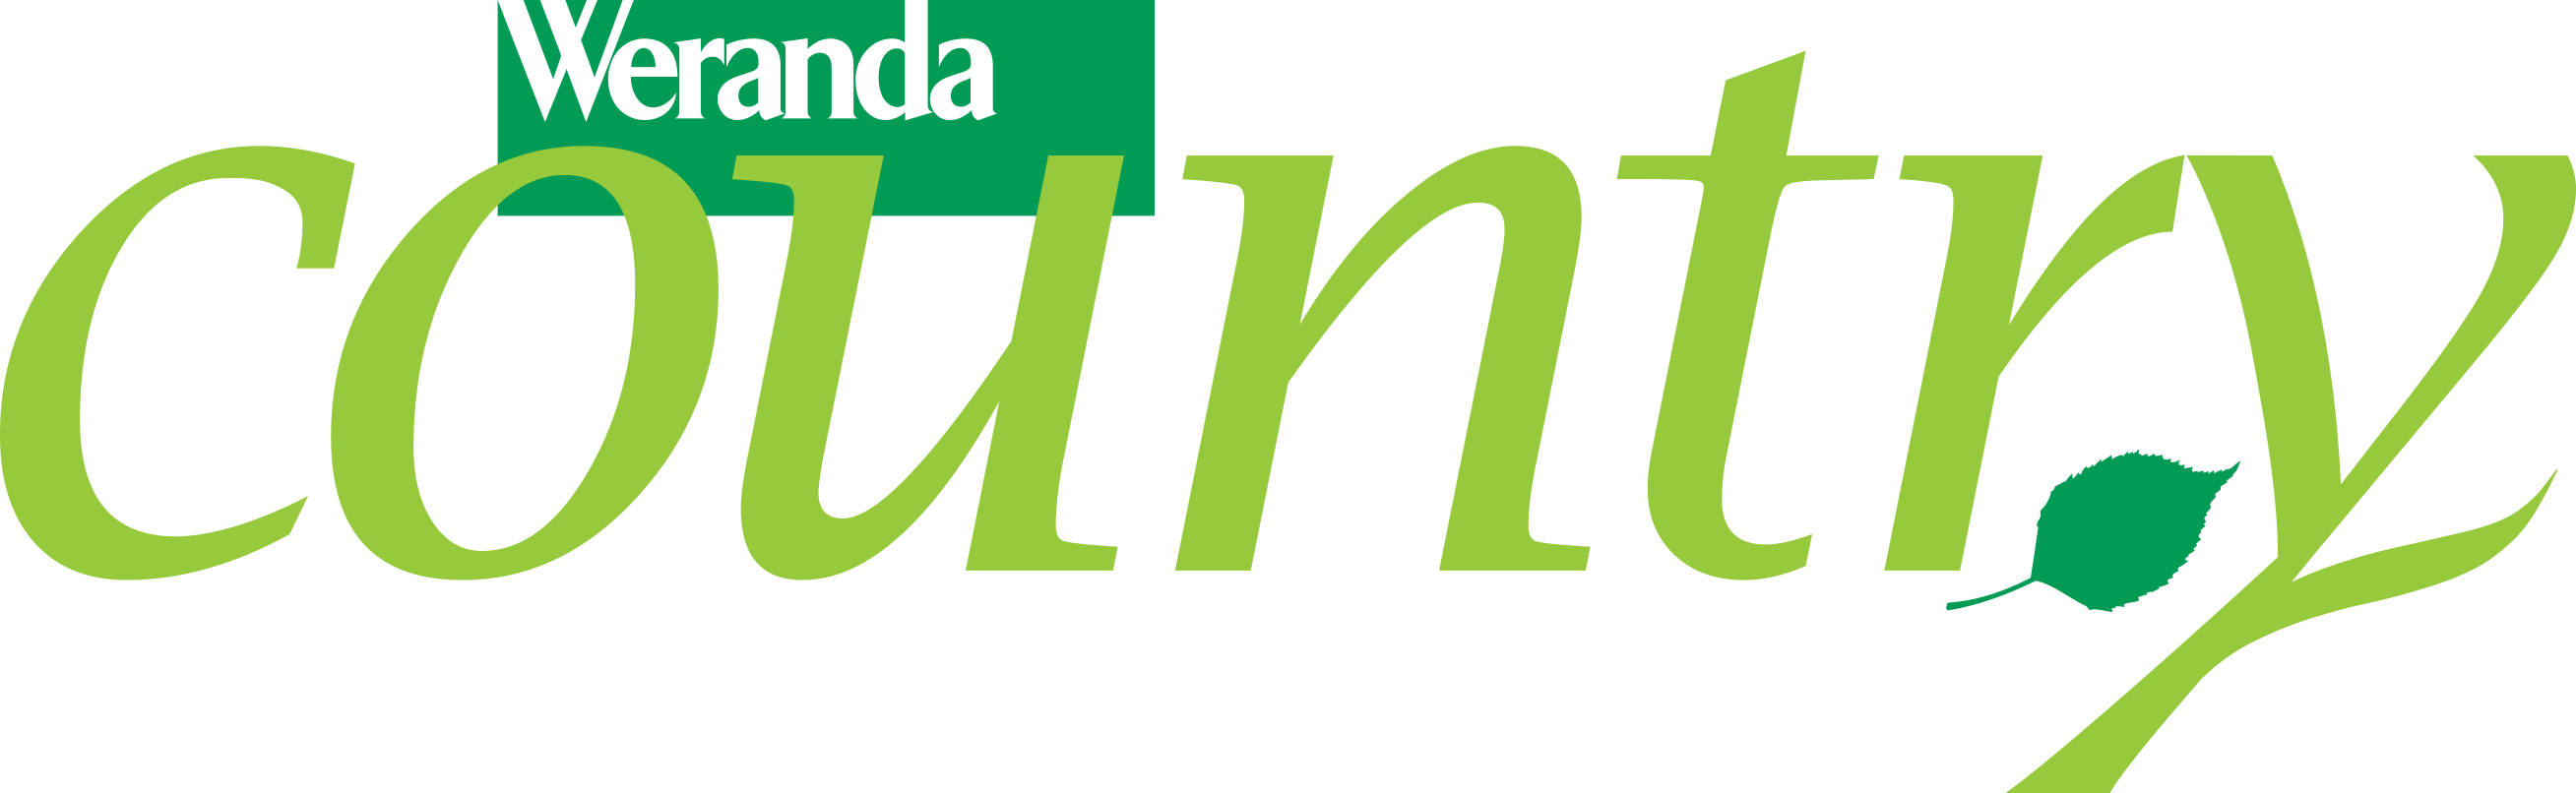 Logo weranda country